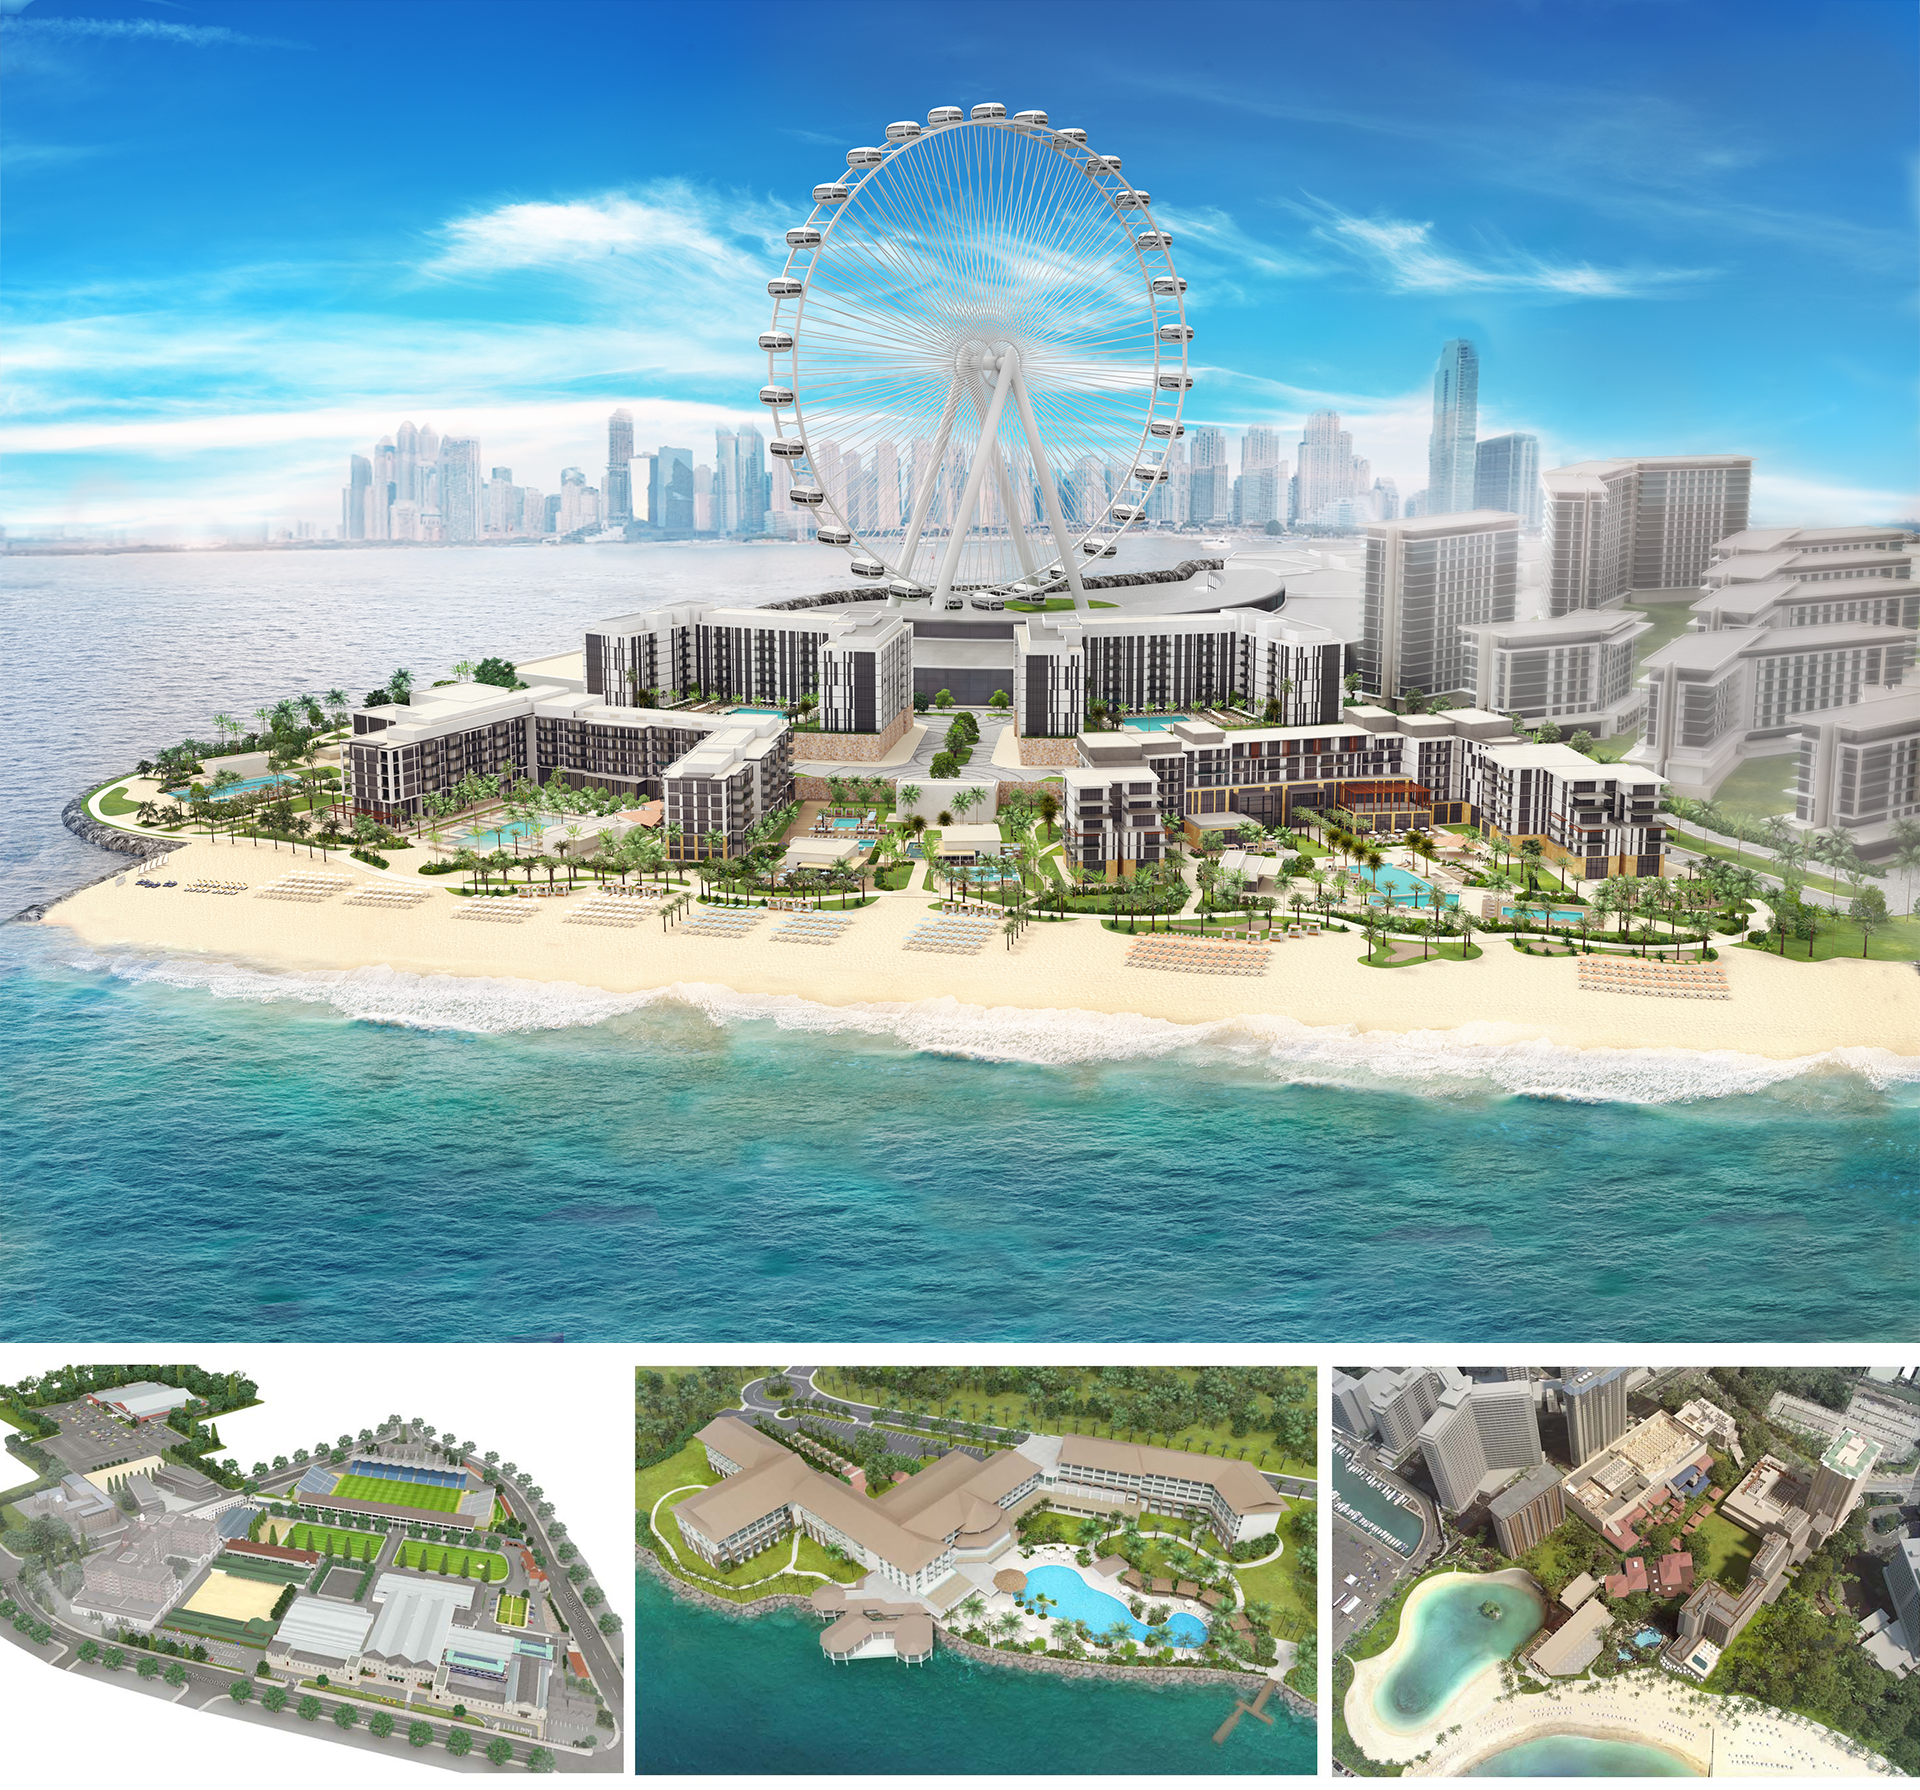 Resort Map  Caesars Palace Dubai